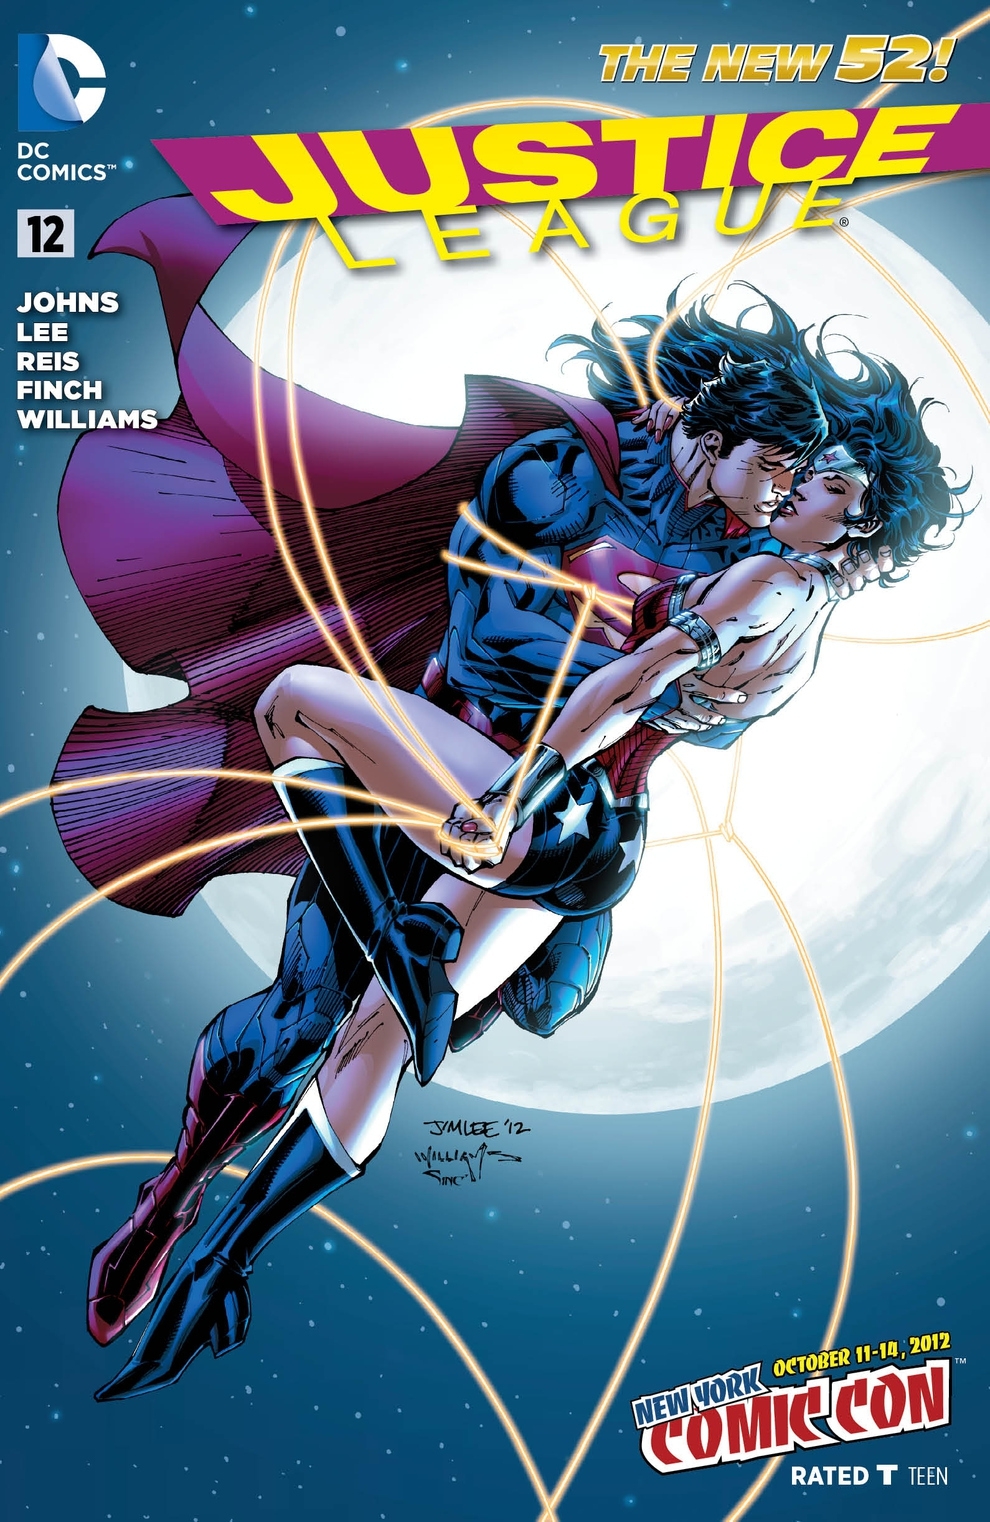 DC Comics Unveils NYCC Exclusive Covers